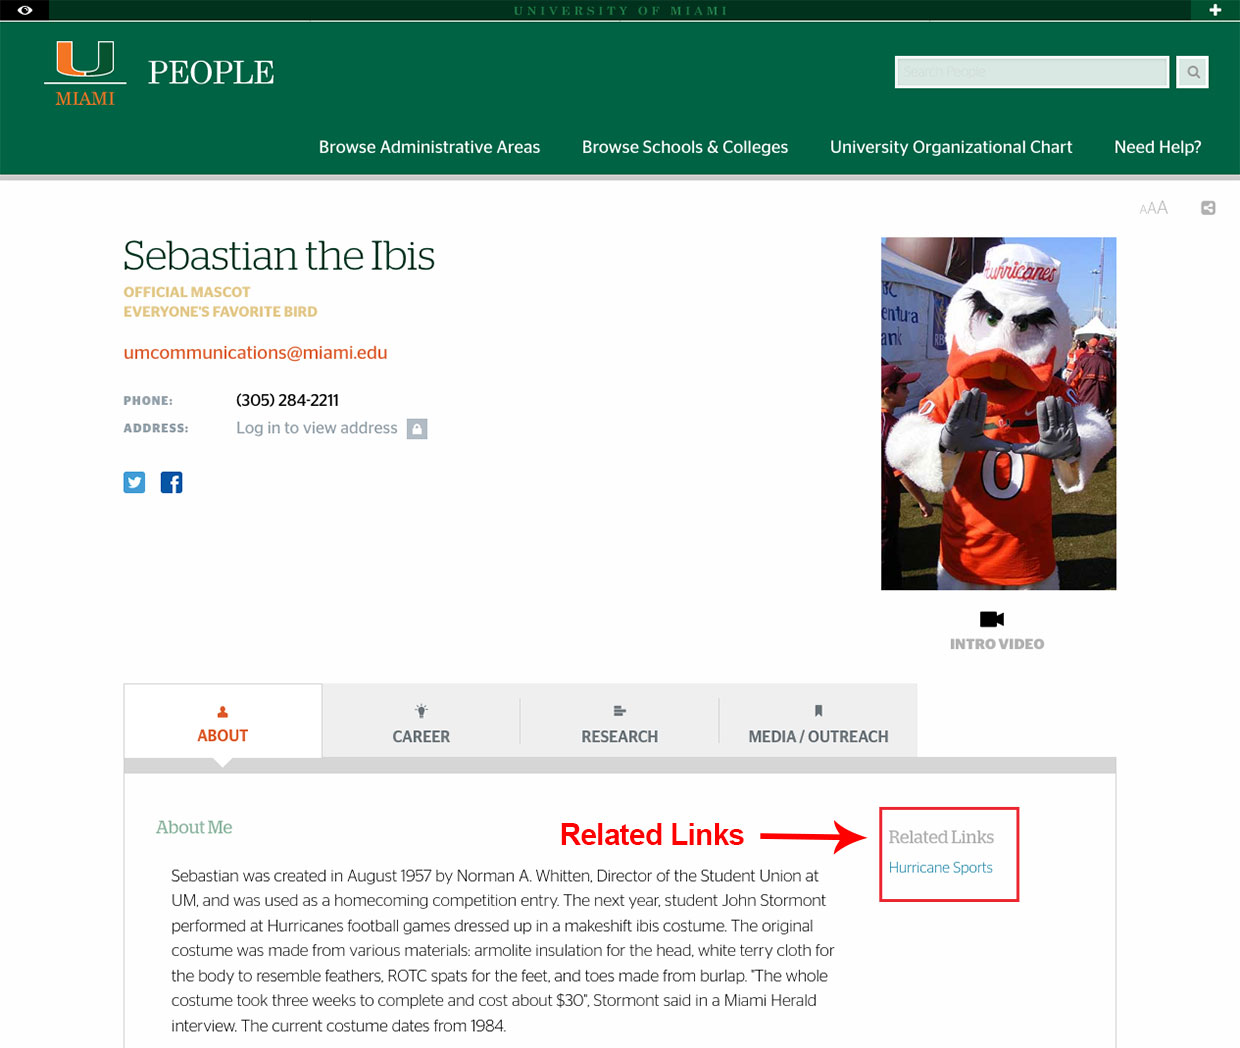 Sebastian the Ibis' related links on People website